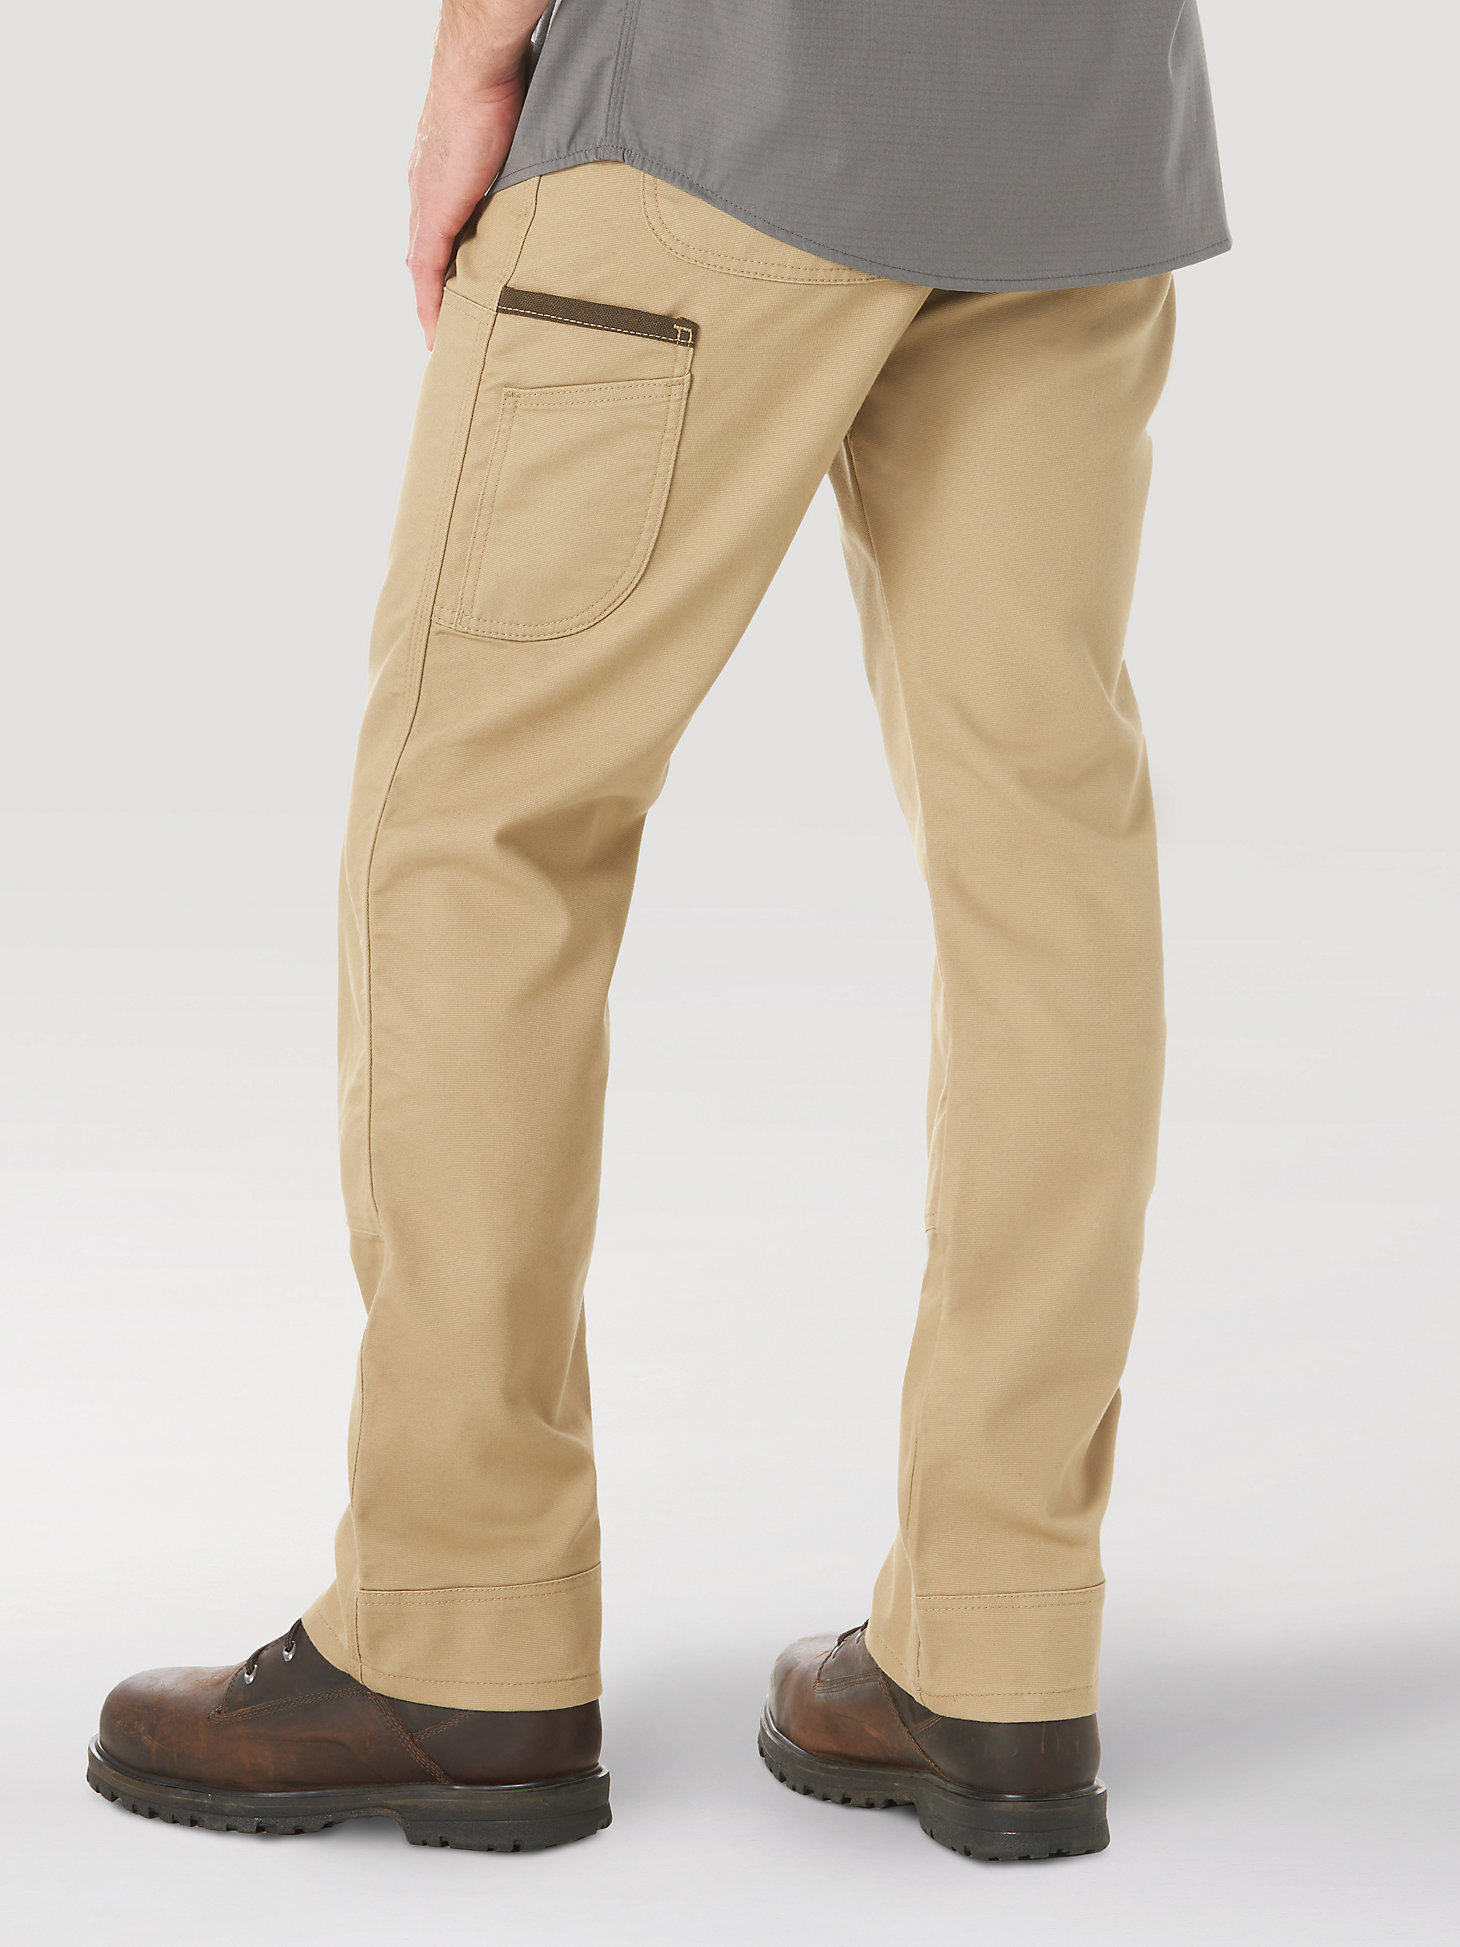 Wrangler® RIGGS Workwear® Straight Fit Work Pant in Golden Khaki alternative view 2